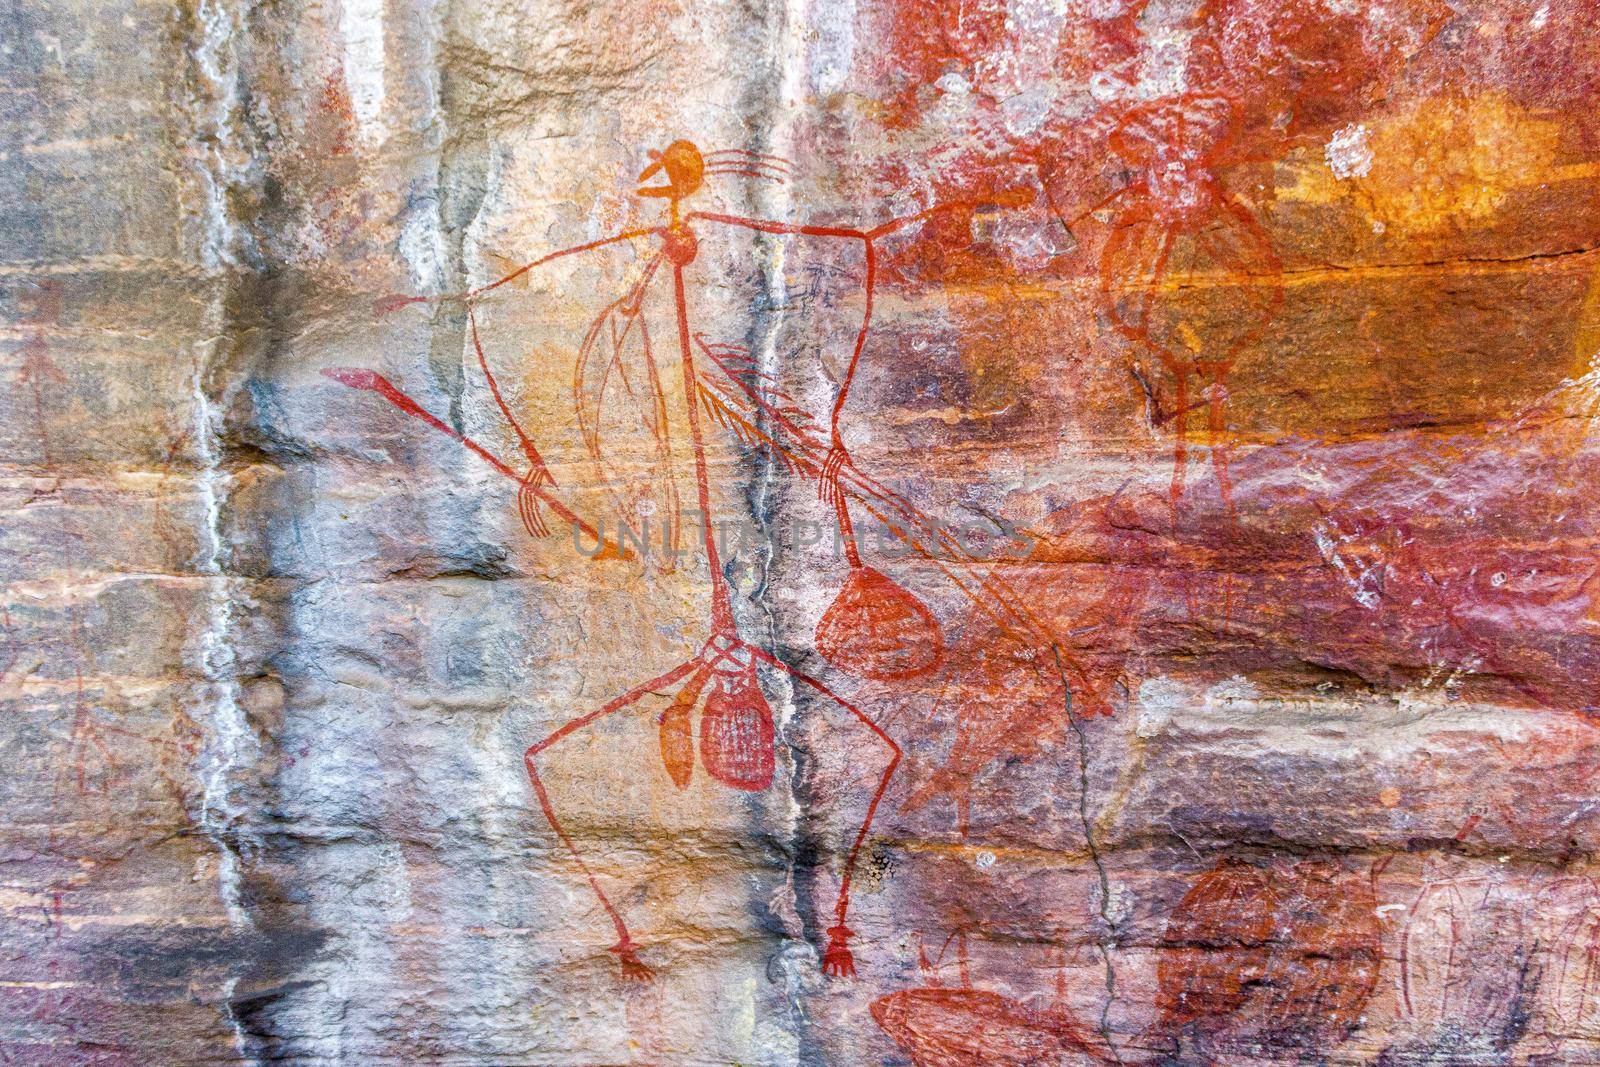 Ancient Aboriginal Art: hand prints, animal herds, spiral, Kakadu National Park, Australia by bettercallcurry